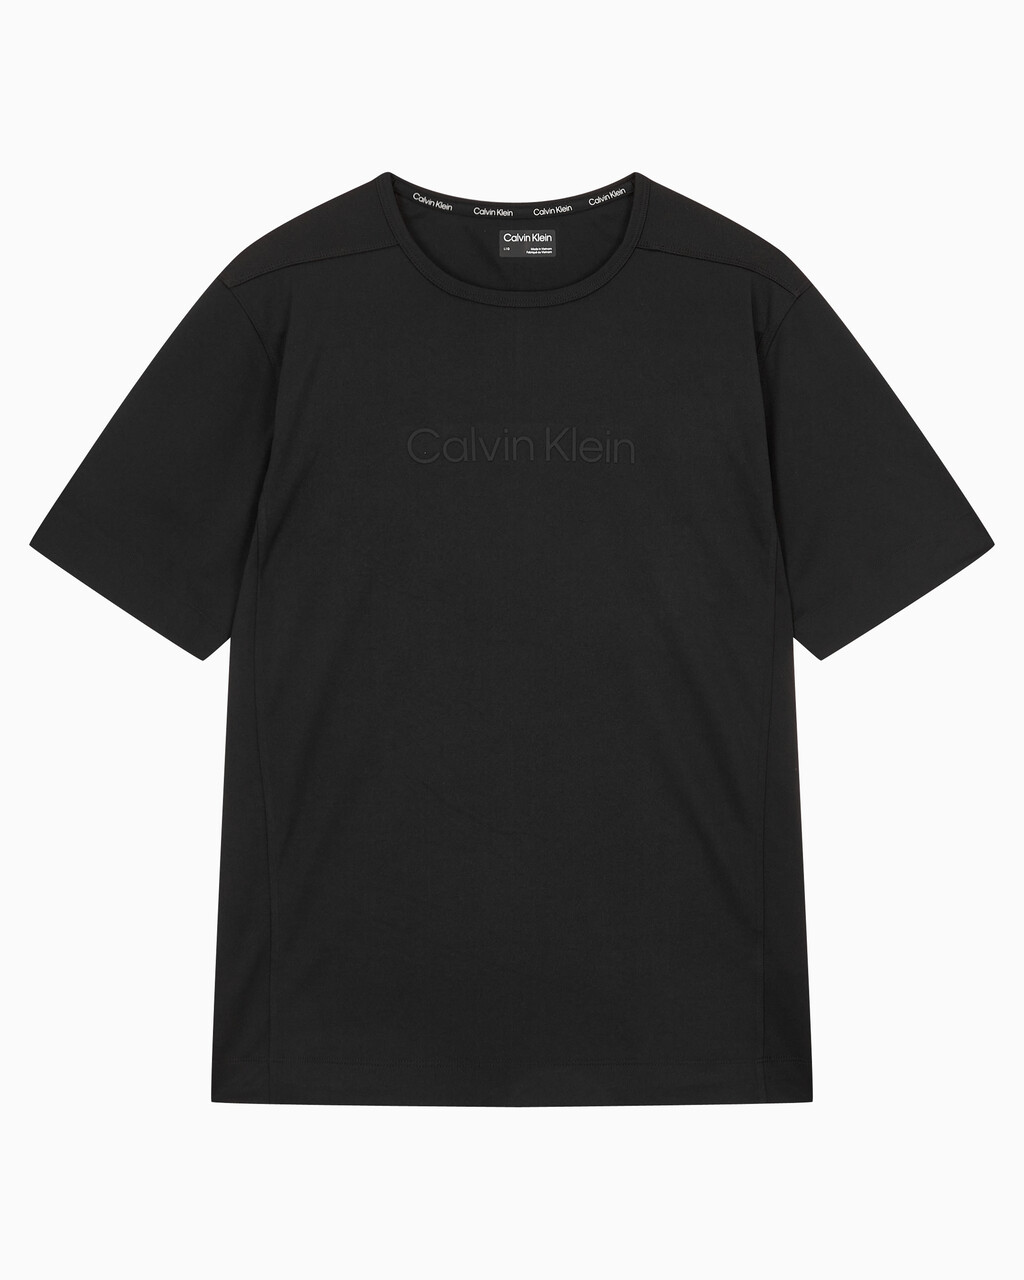 Buy 남성 레귤러 핏 에센셜 스트레치 기능성 반팔 티셔츠 in color BLACK